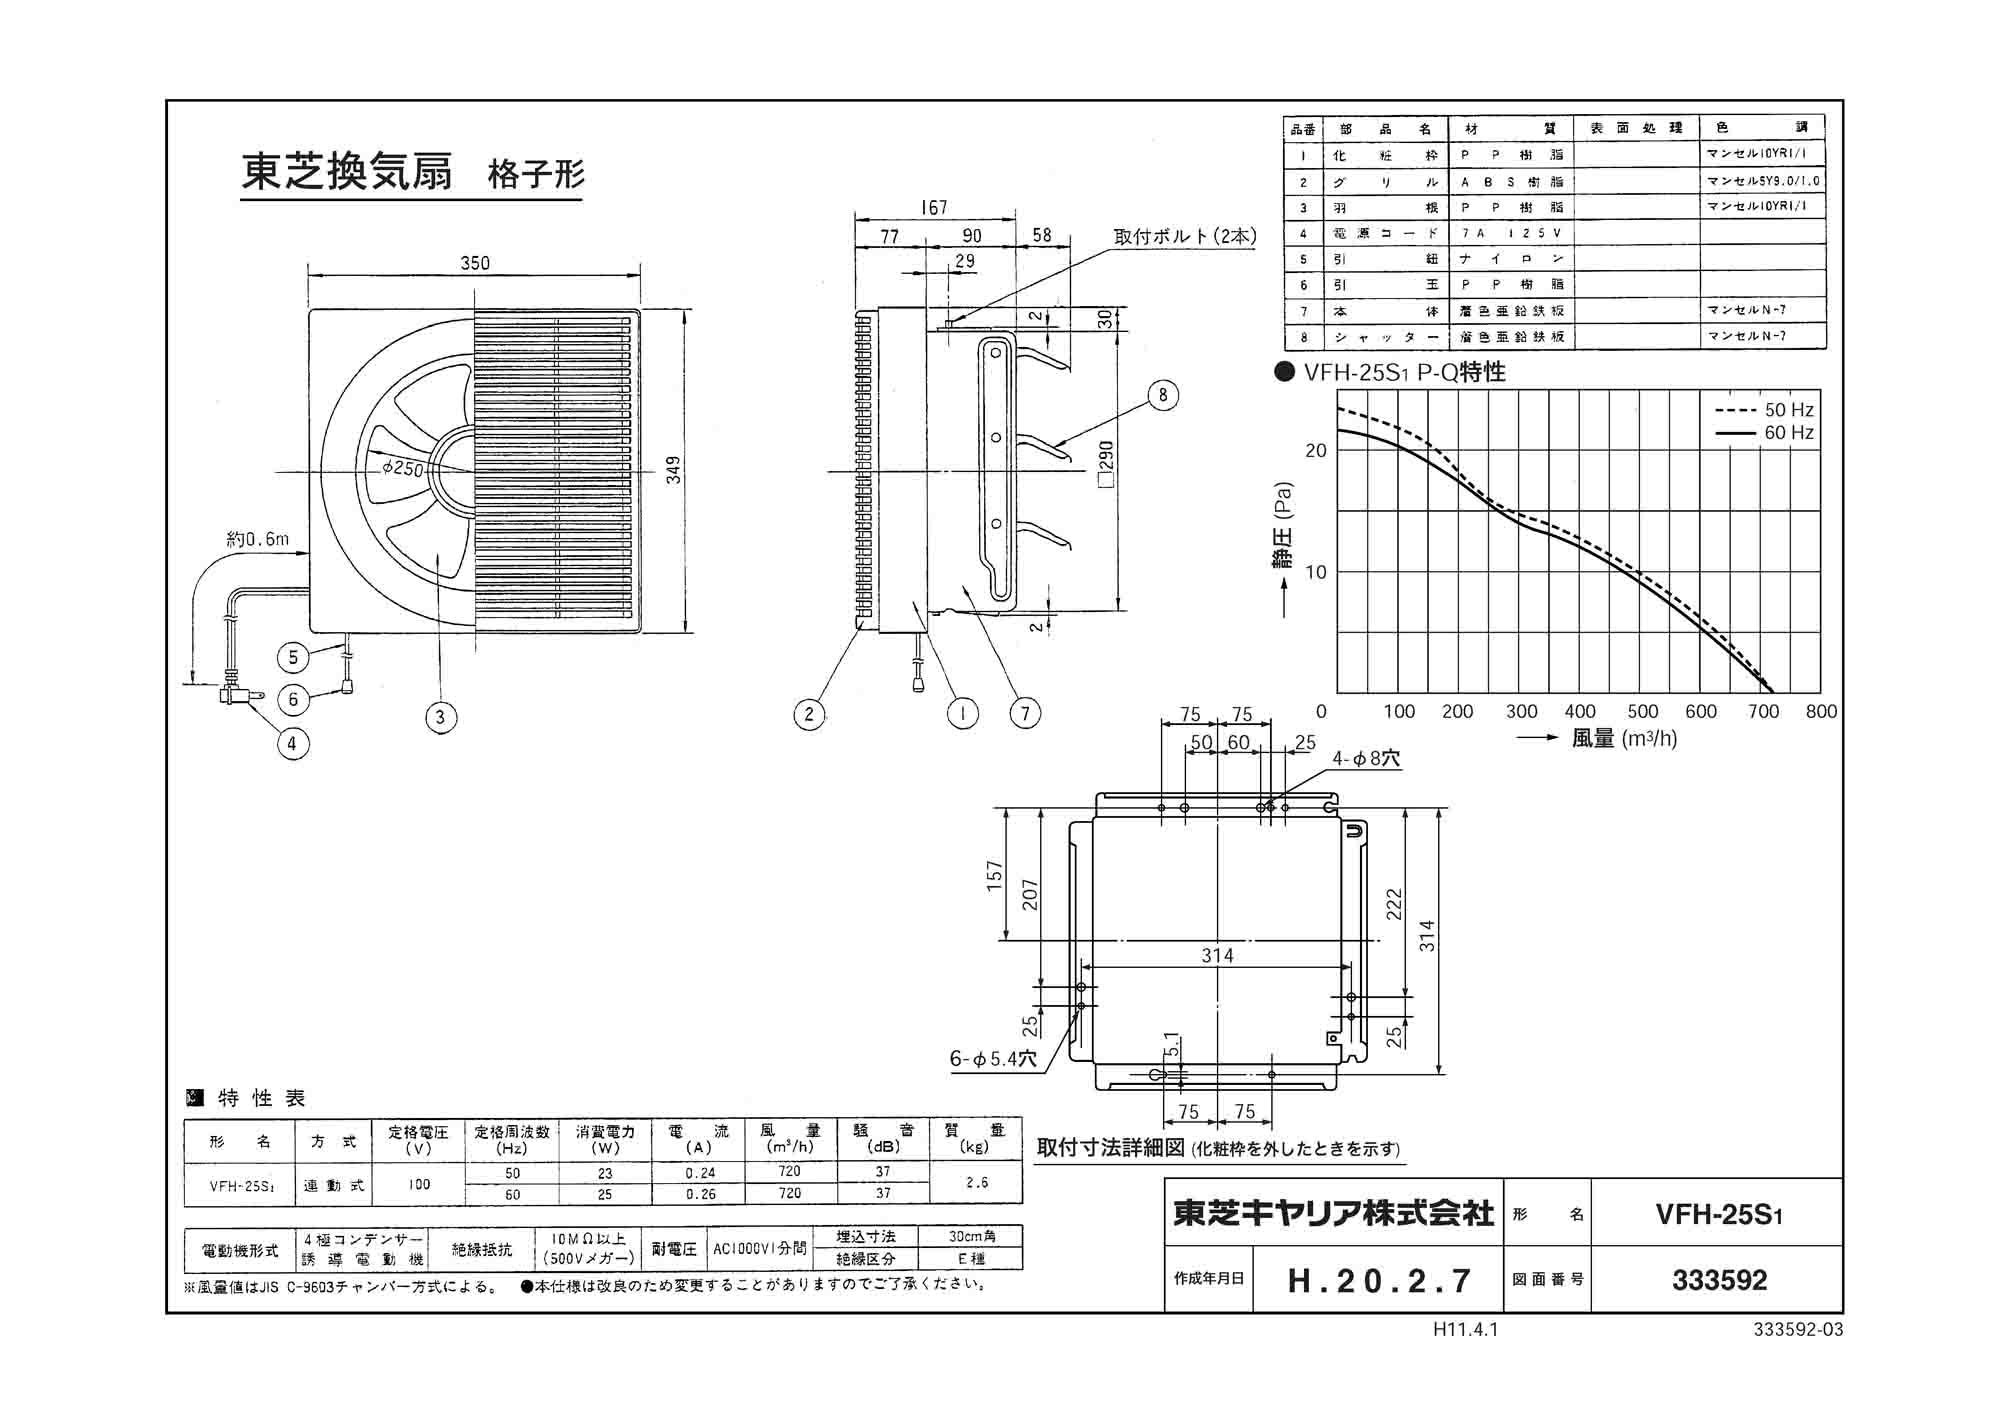 東芝 TOSHIBA 産業用換気扇 VFM-P30K 【公式通販】ストア DIY、工具